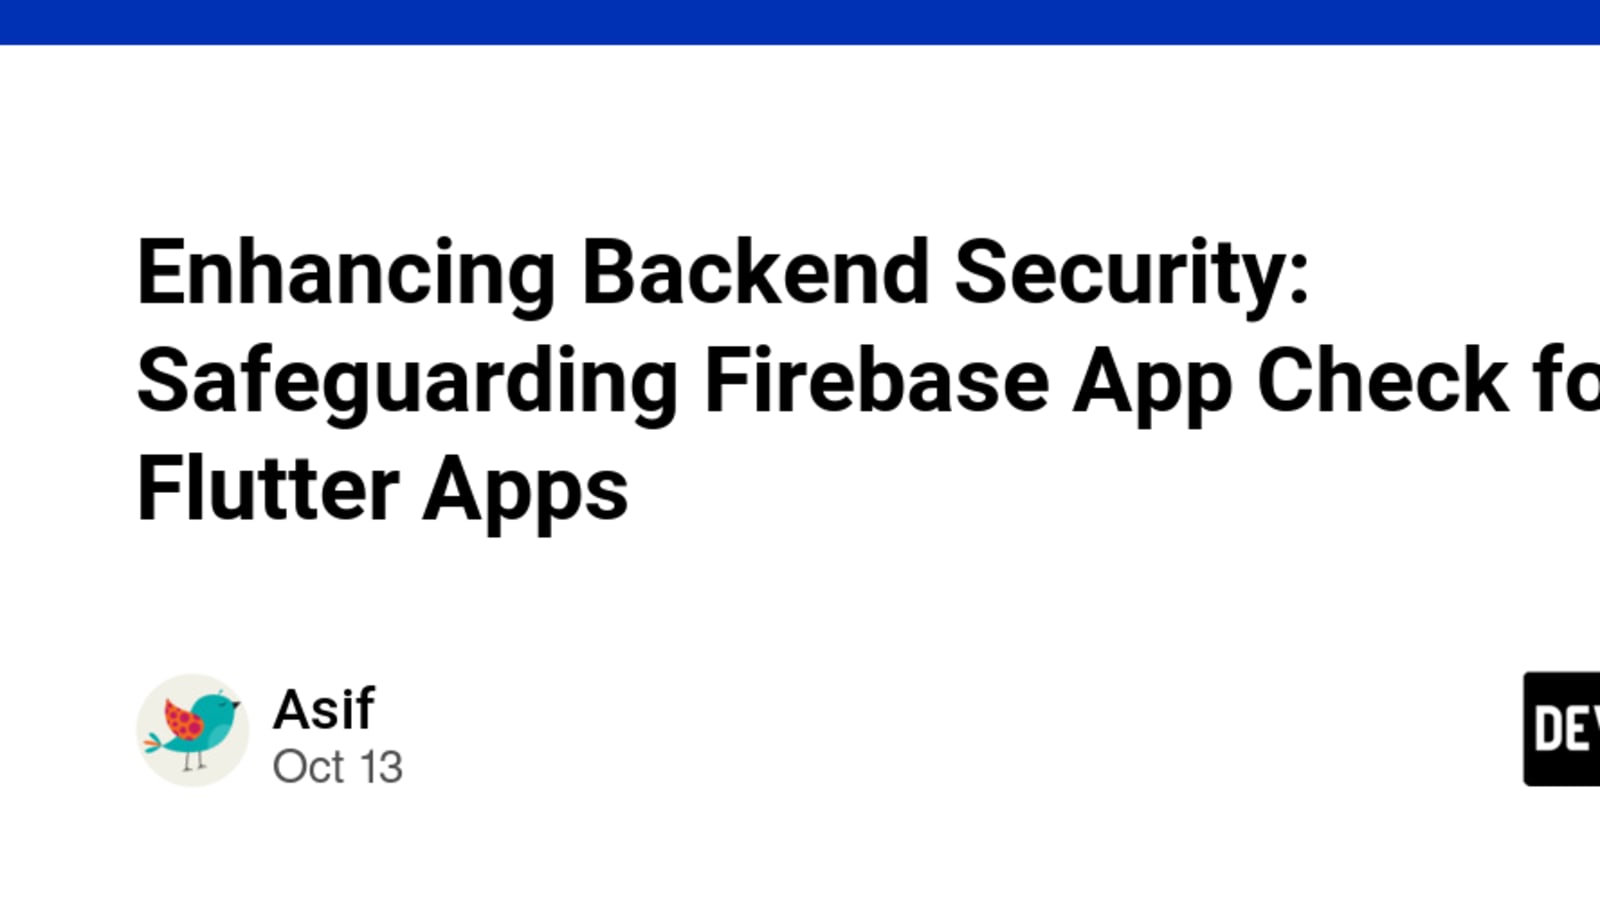 Firebase App Check